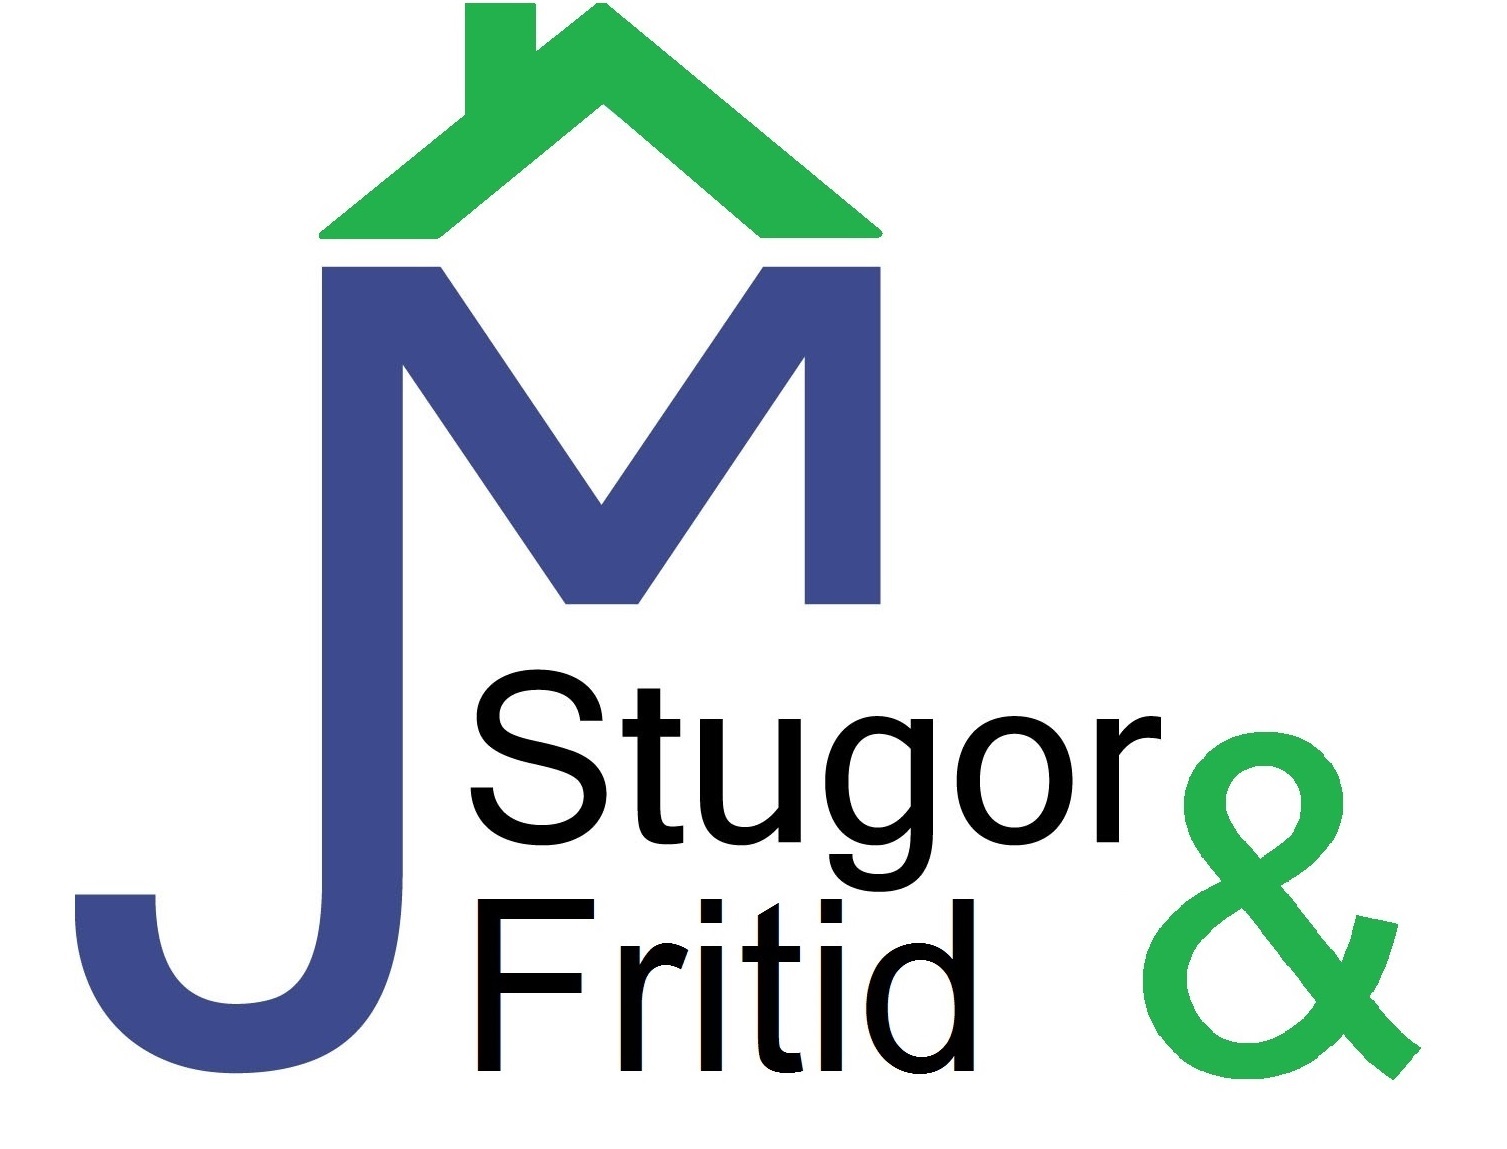 JM Stugor & Fritid